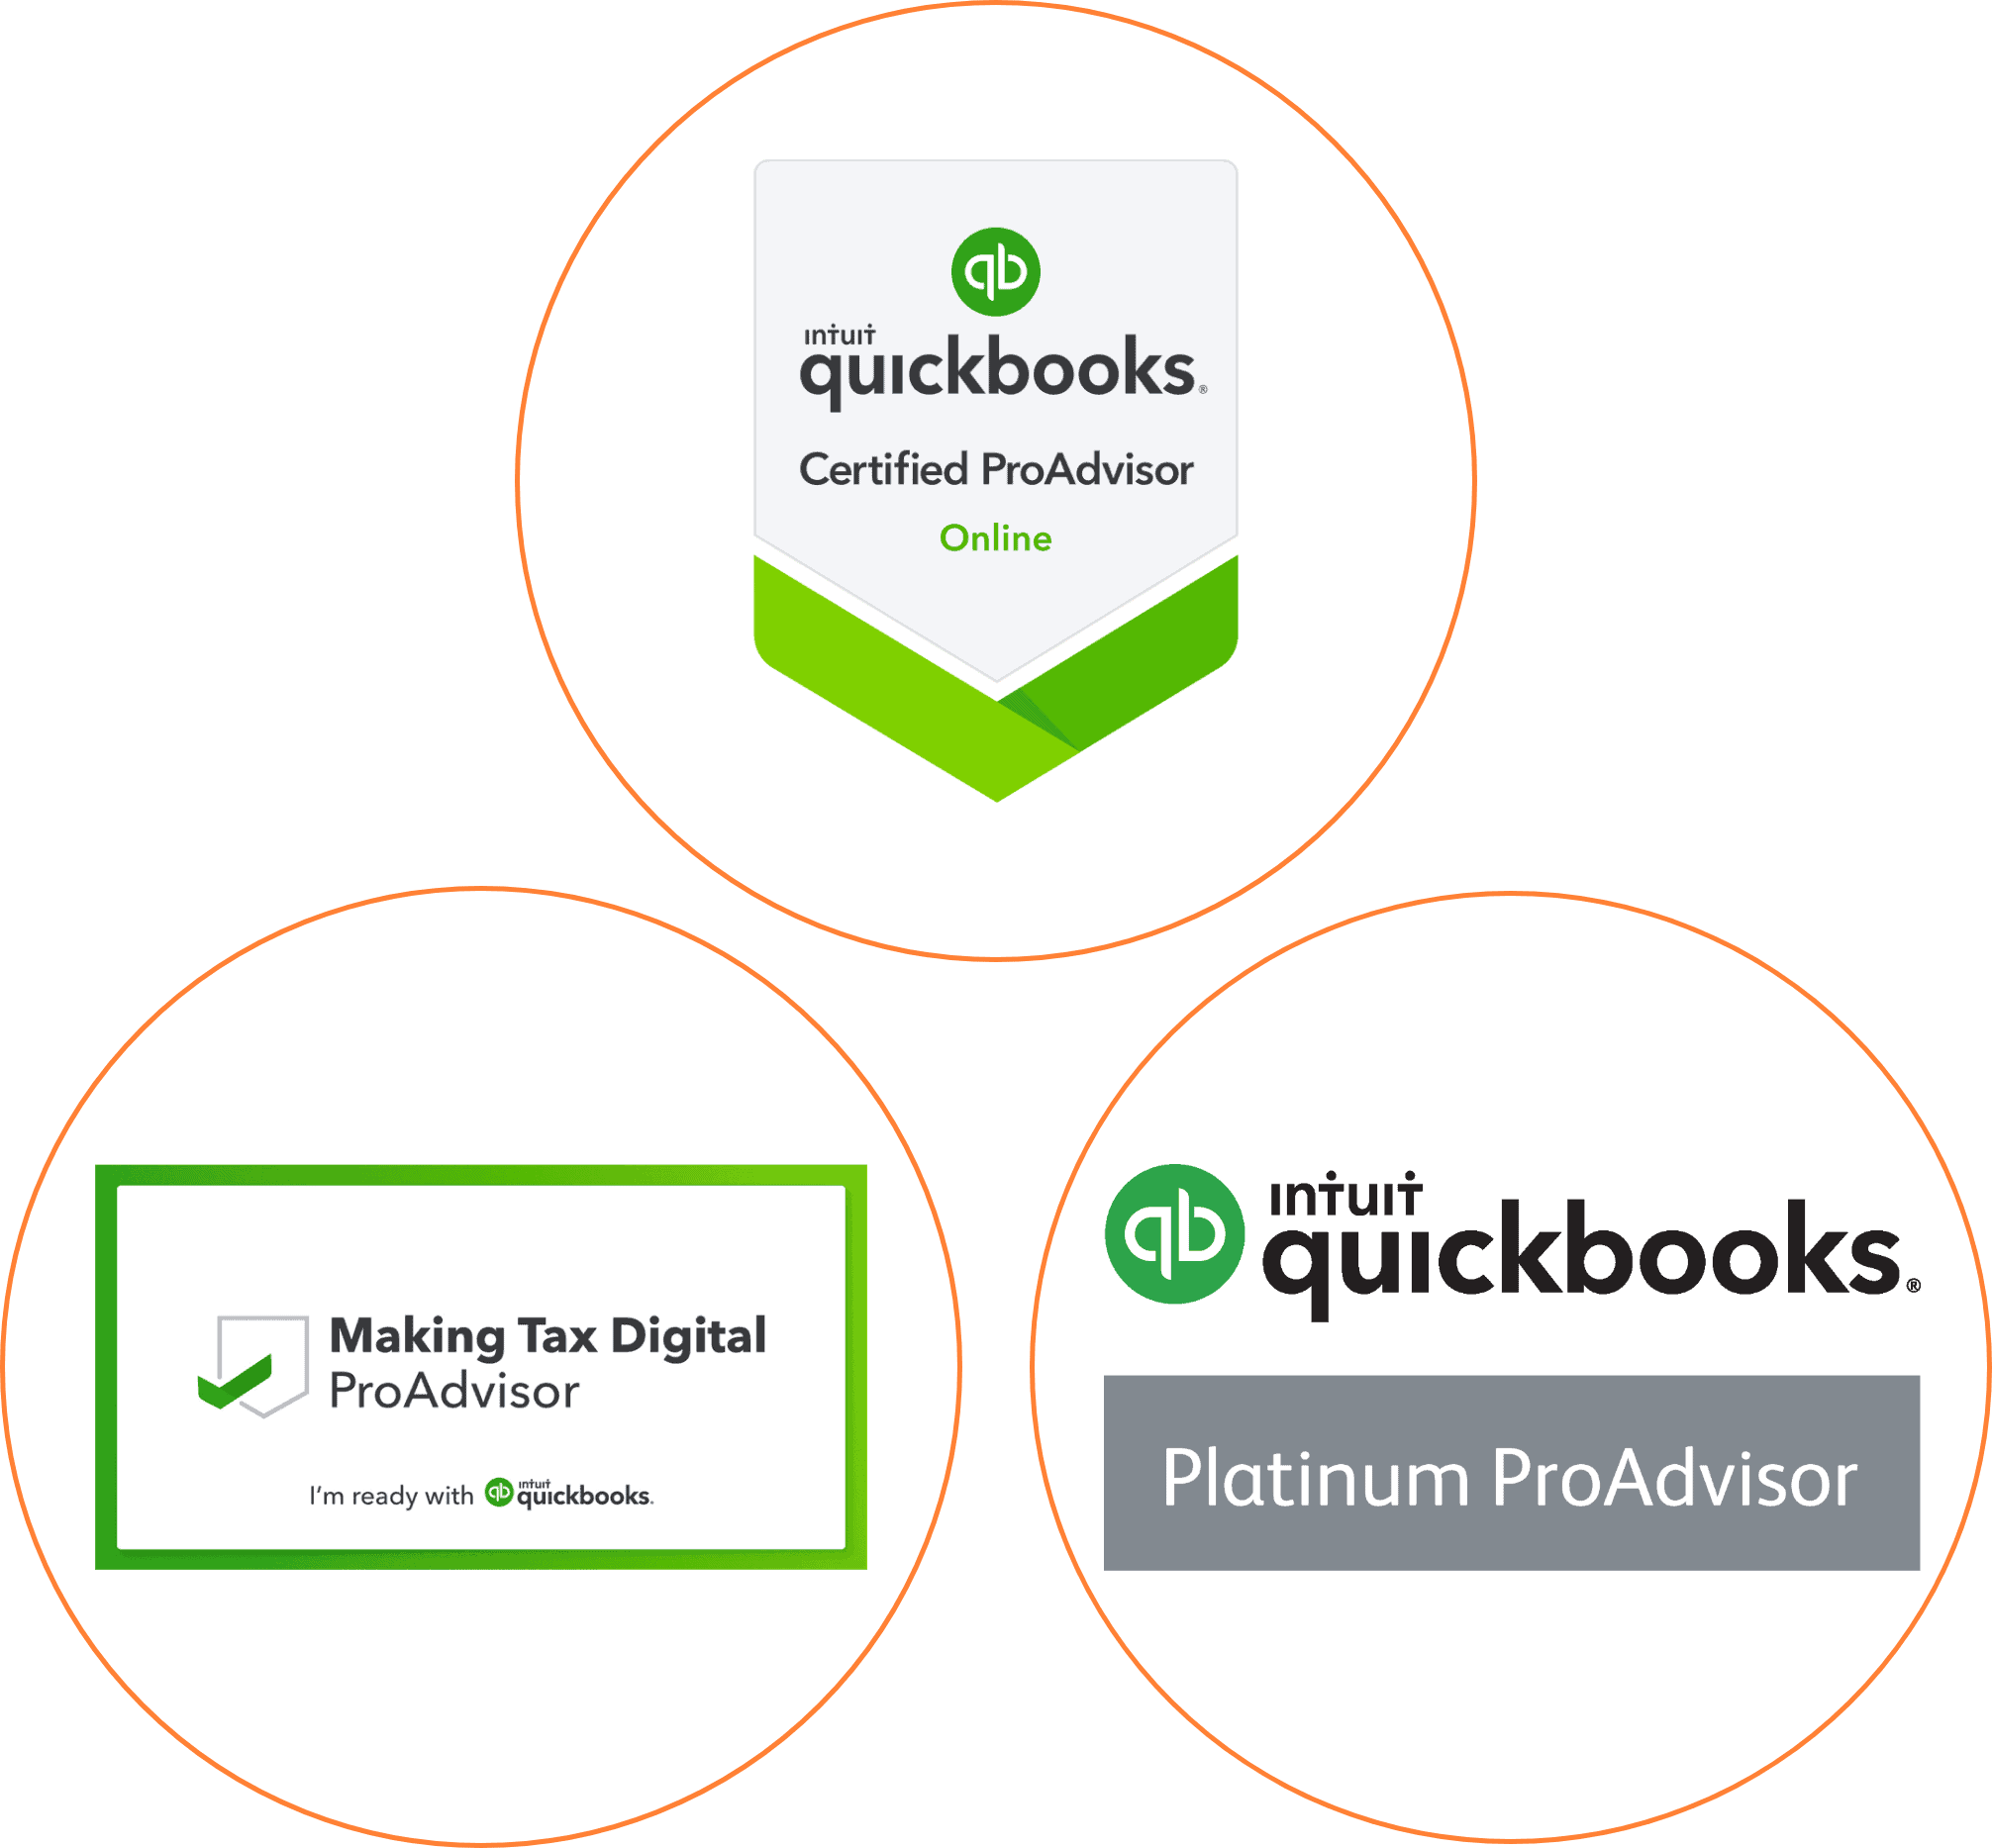 New QuickBooks certifications